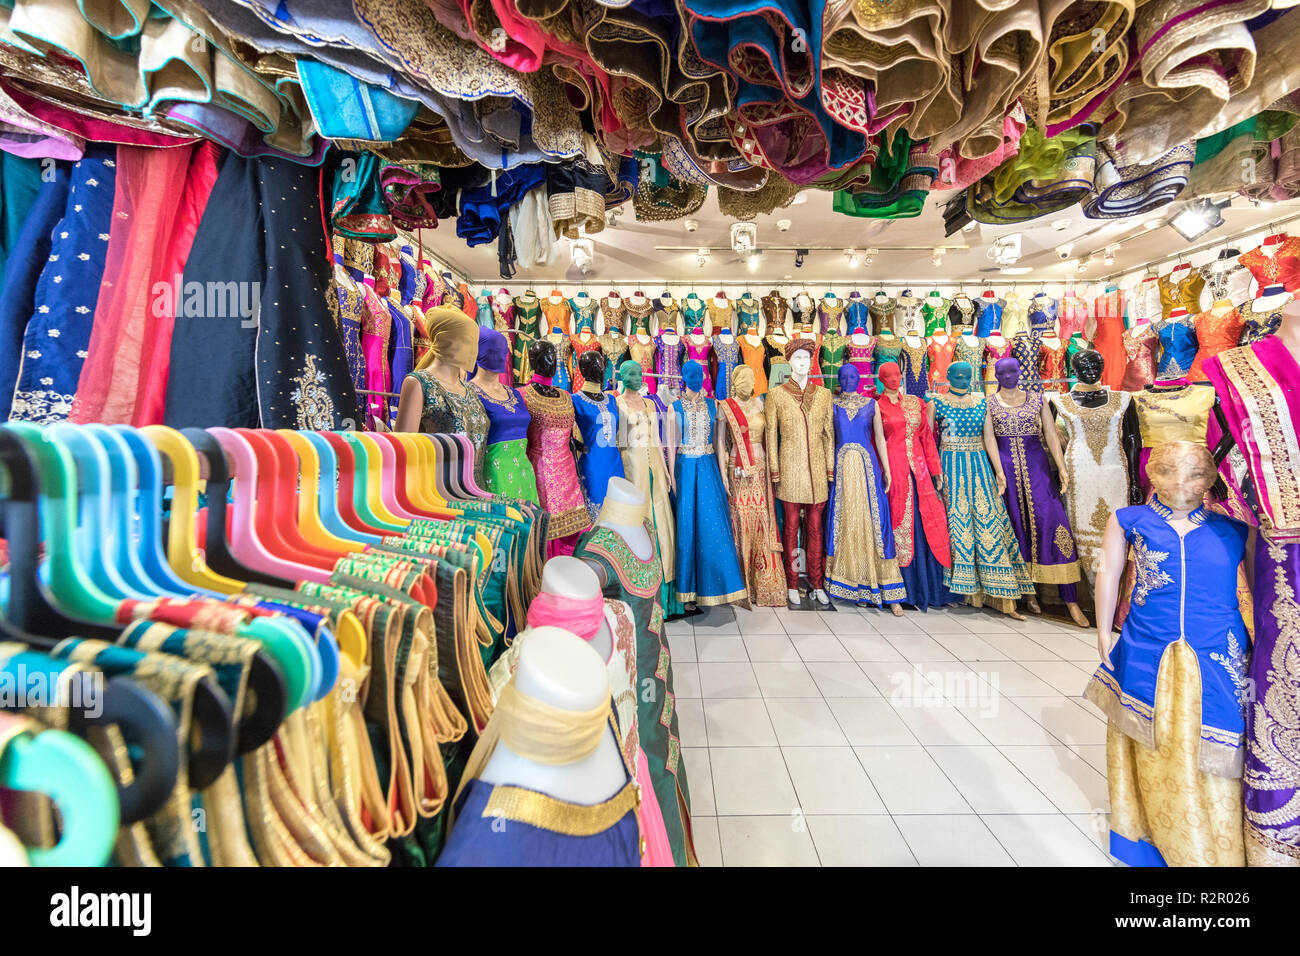 Singapur, Little India, mercado de ropa, showroom con prendas Foto de stock